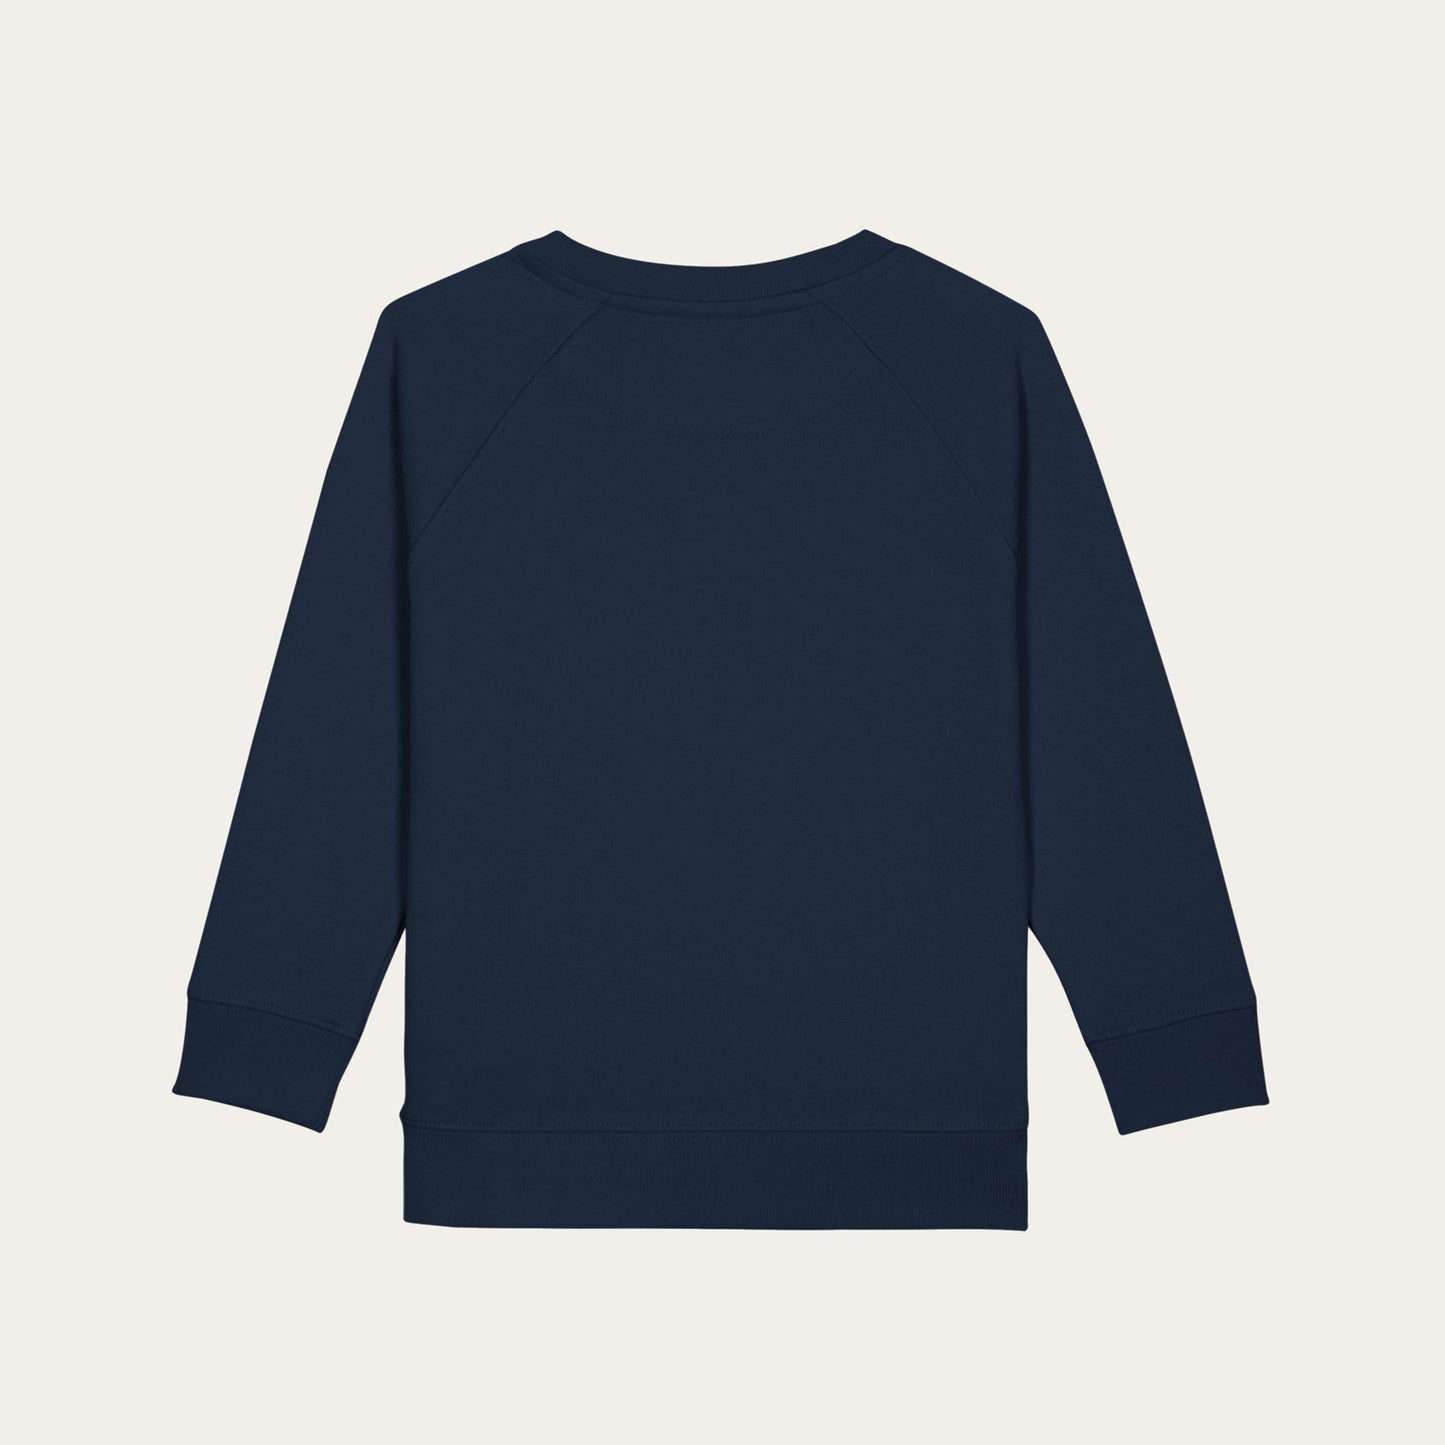 ROFFA. kinder sweater - 100% organisch katoen